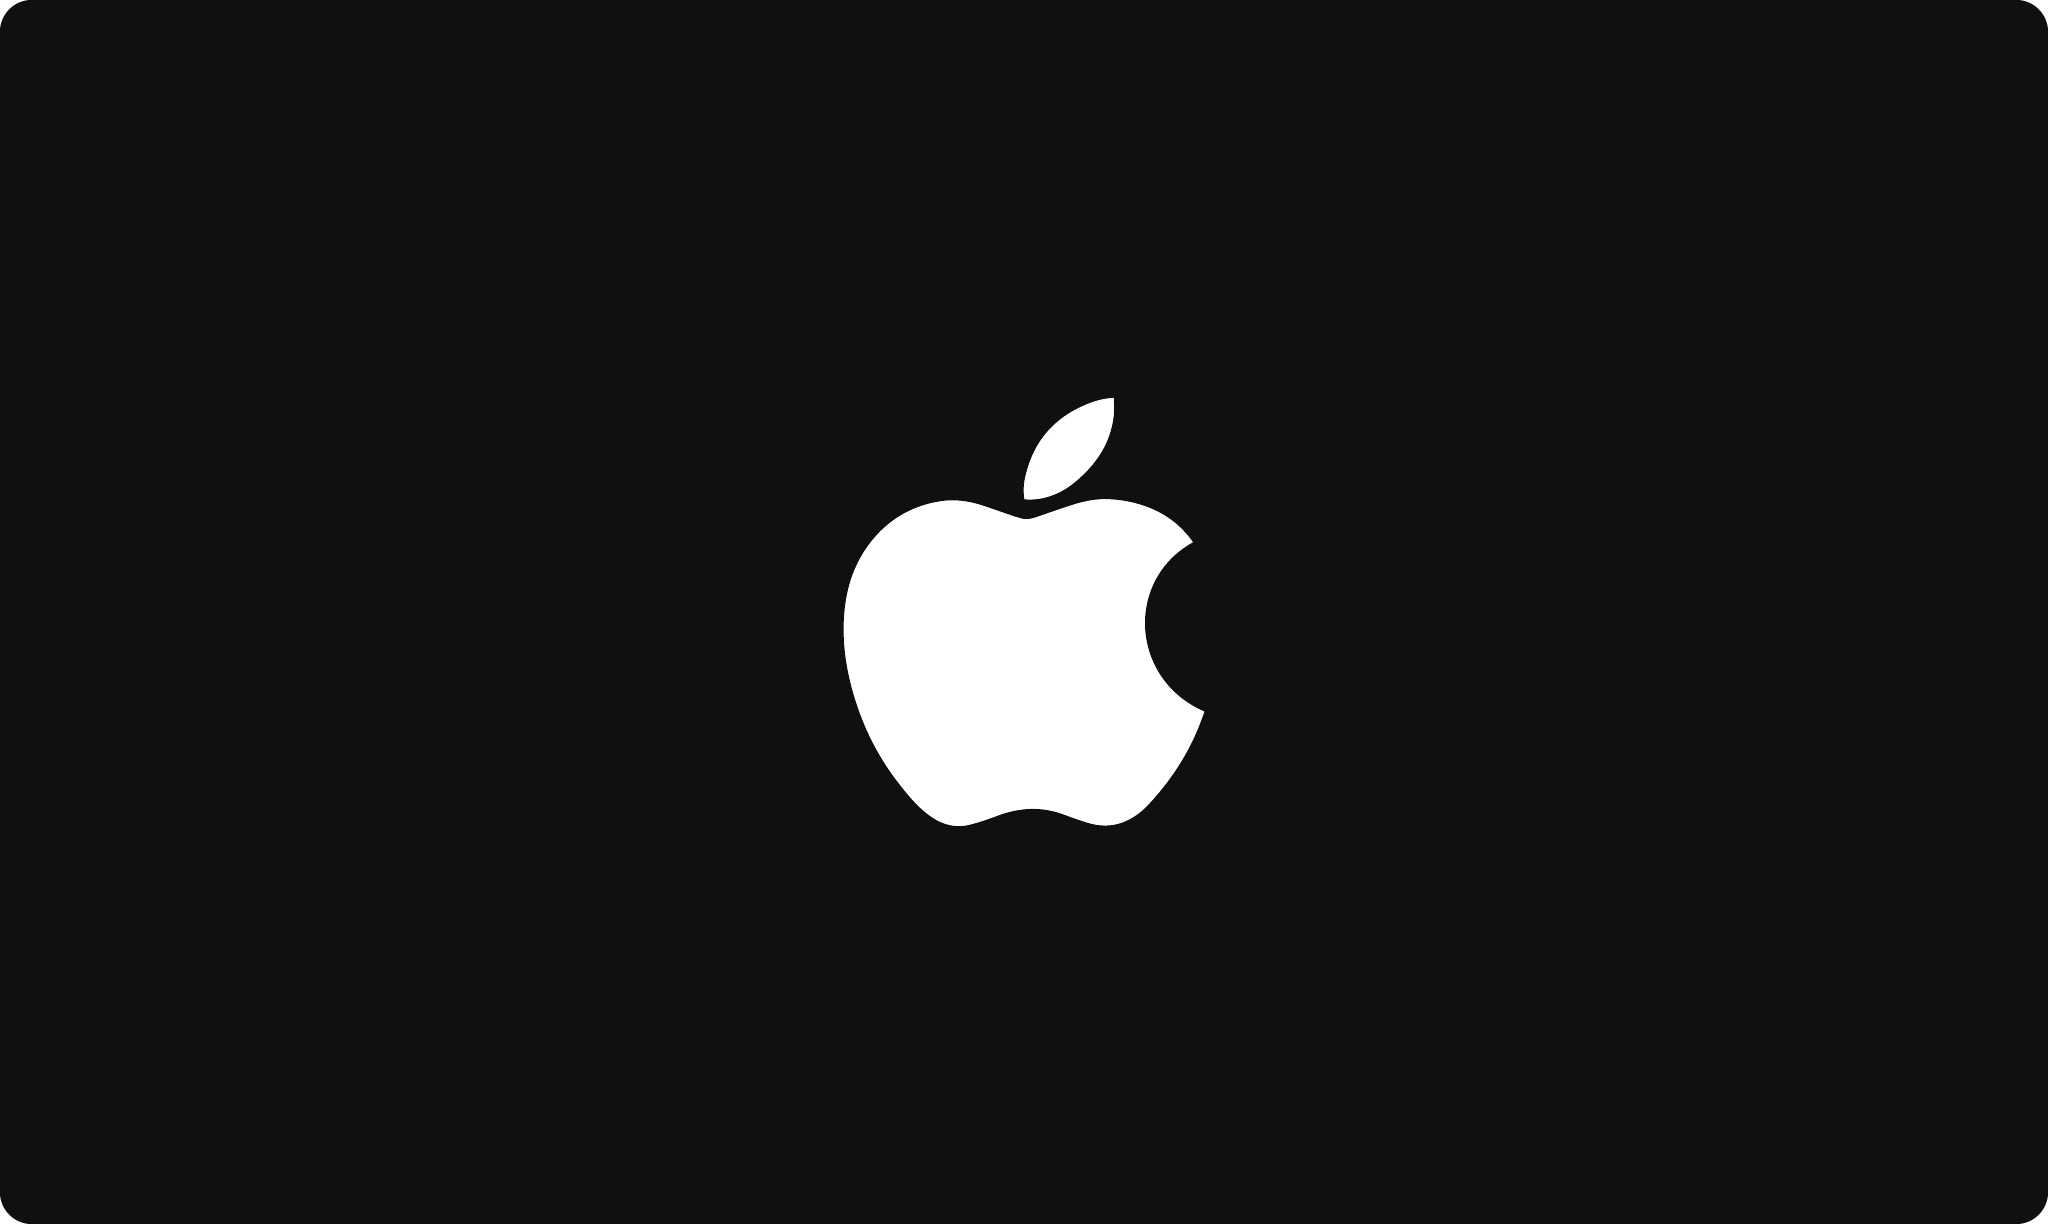 苹果Apple